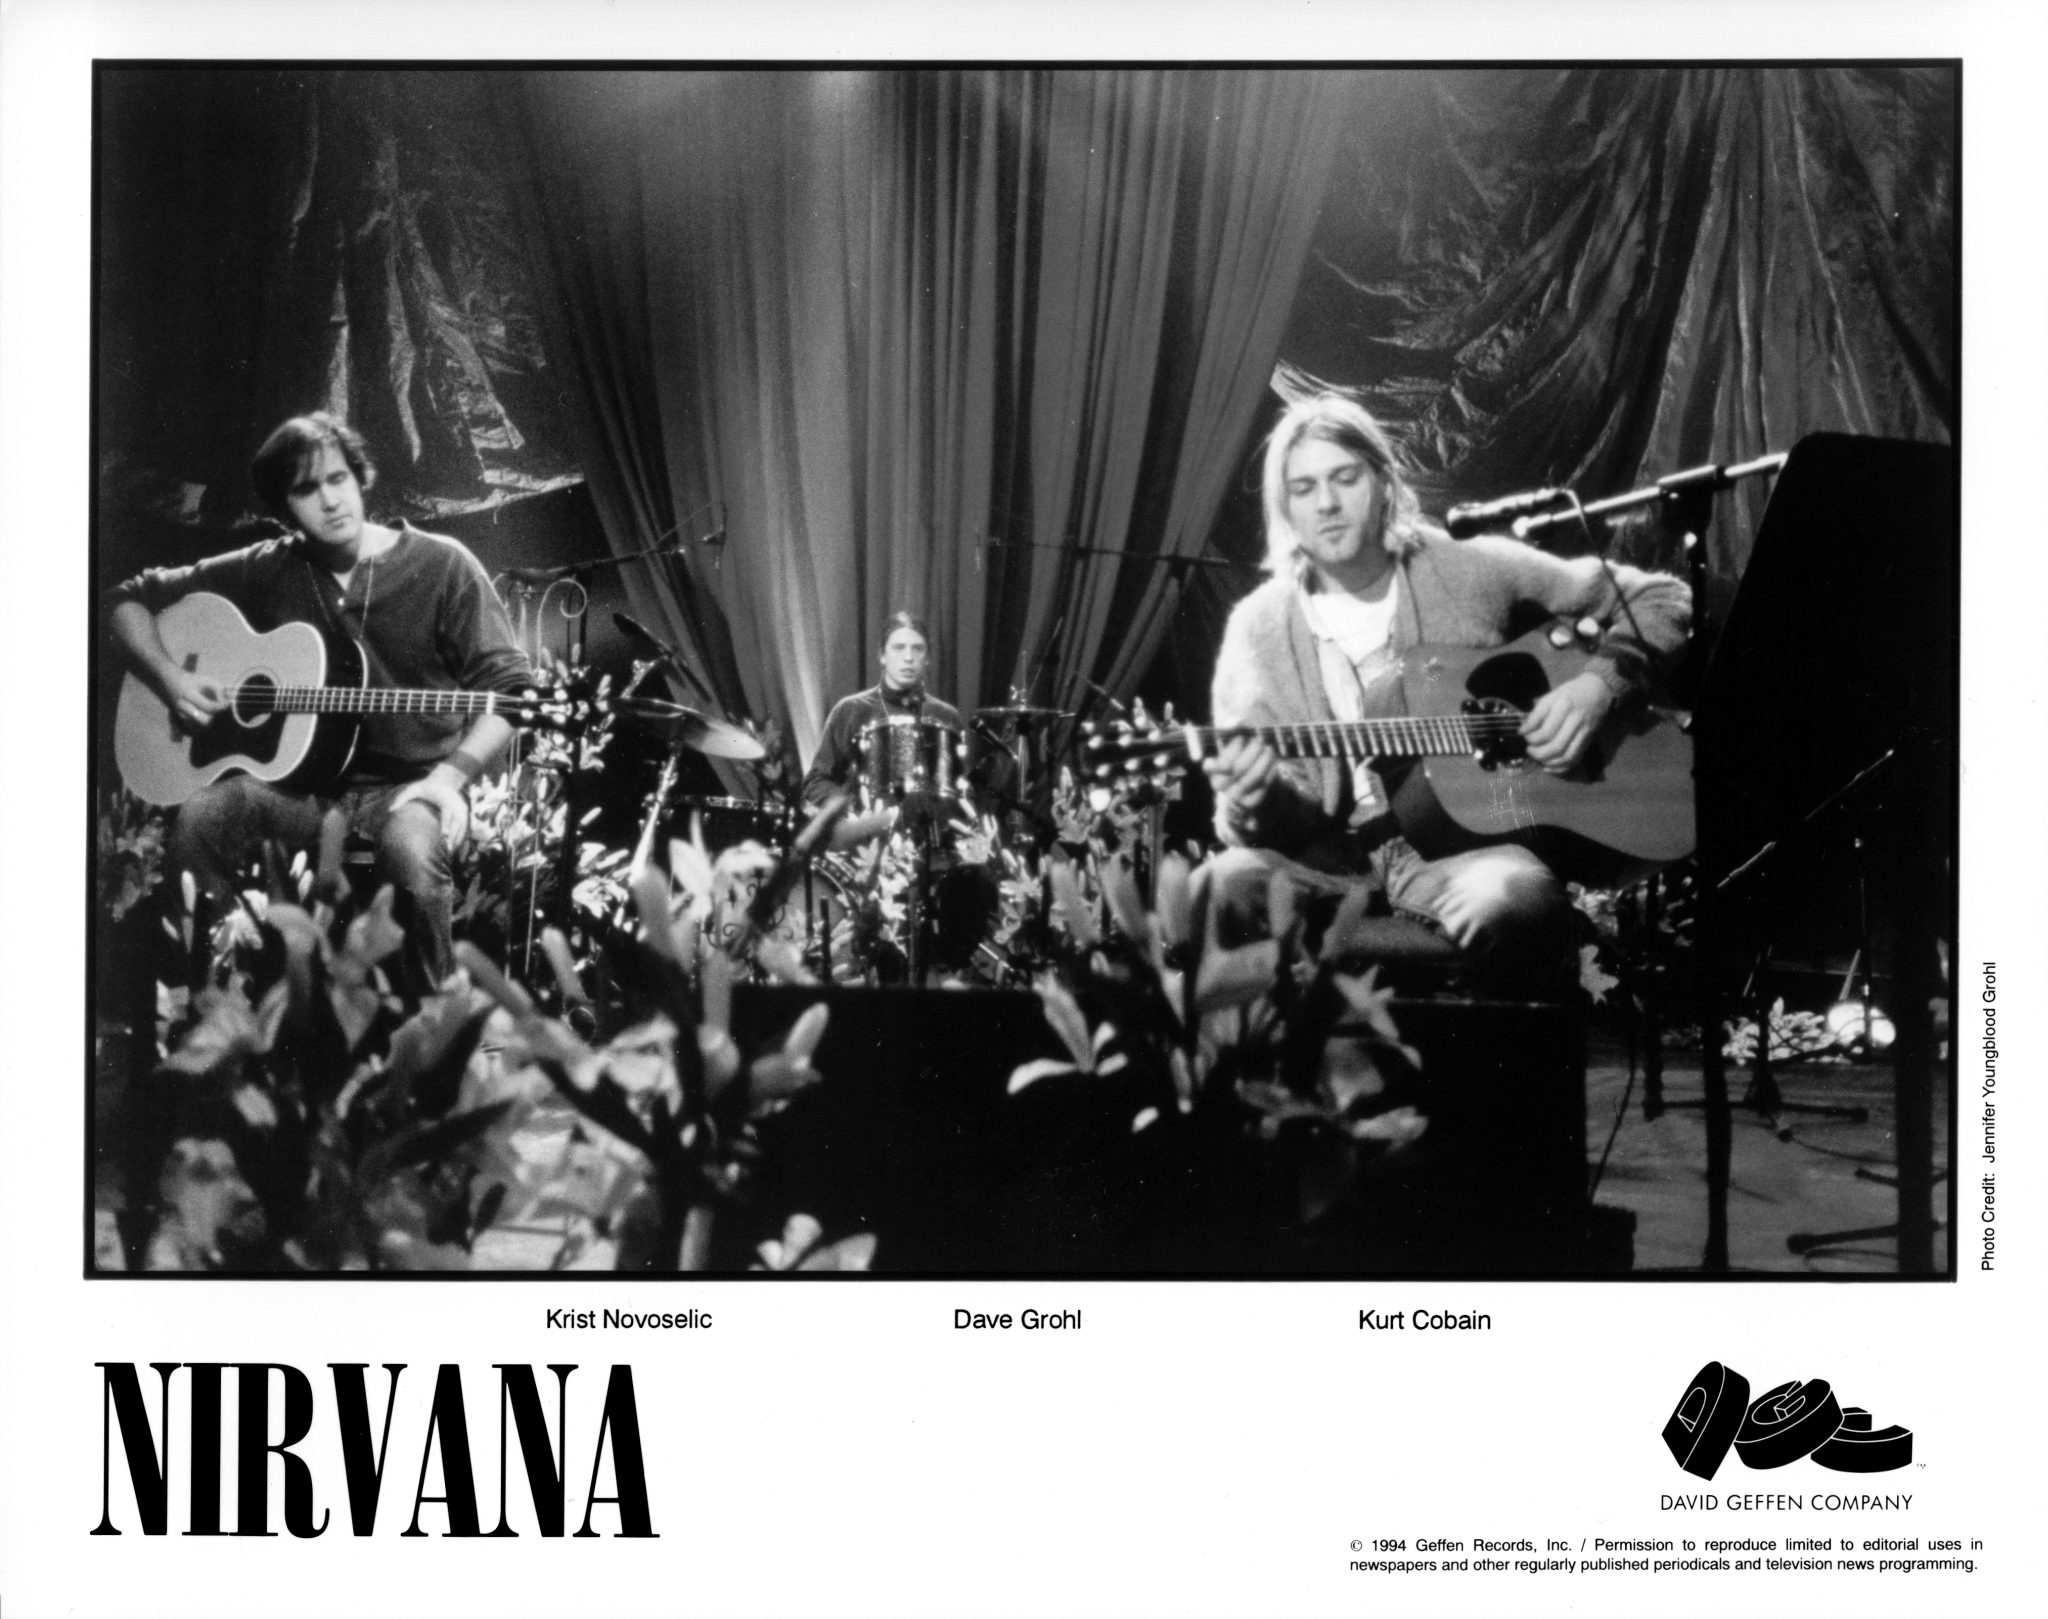 Nirvana Dave Grohl Kurt Cobain Krist Novoselic HD Wallpaper Of Music